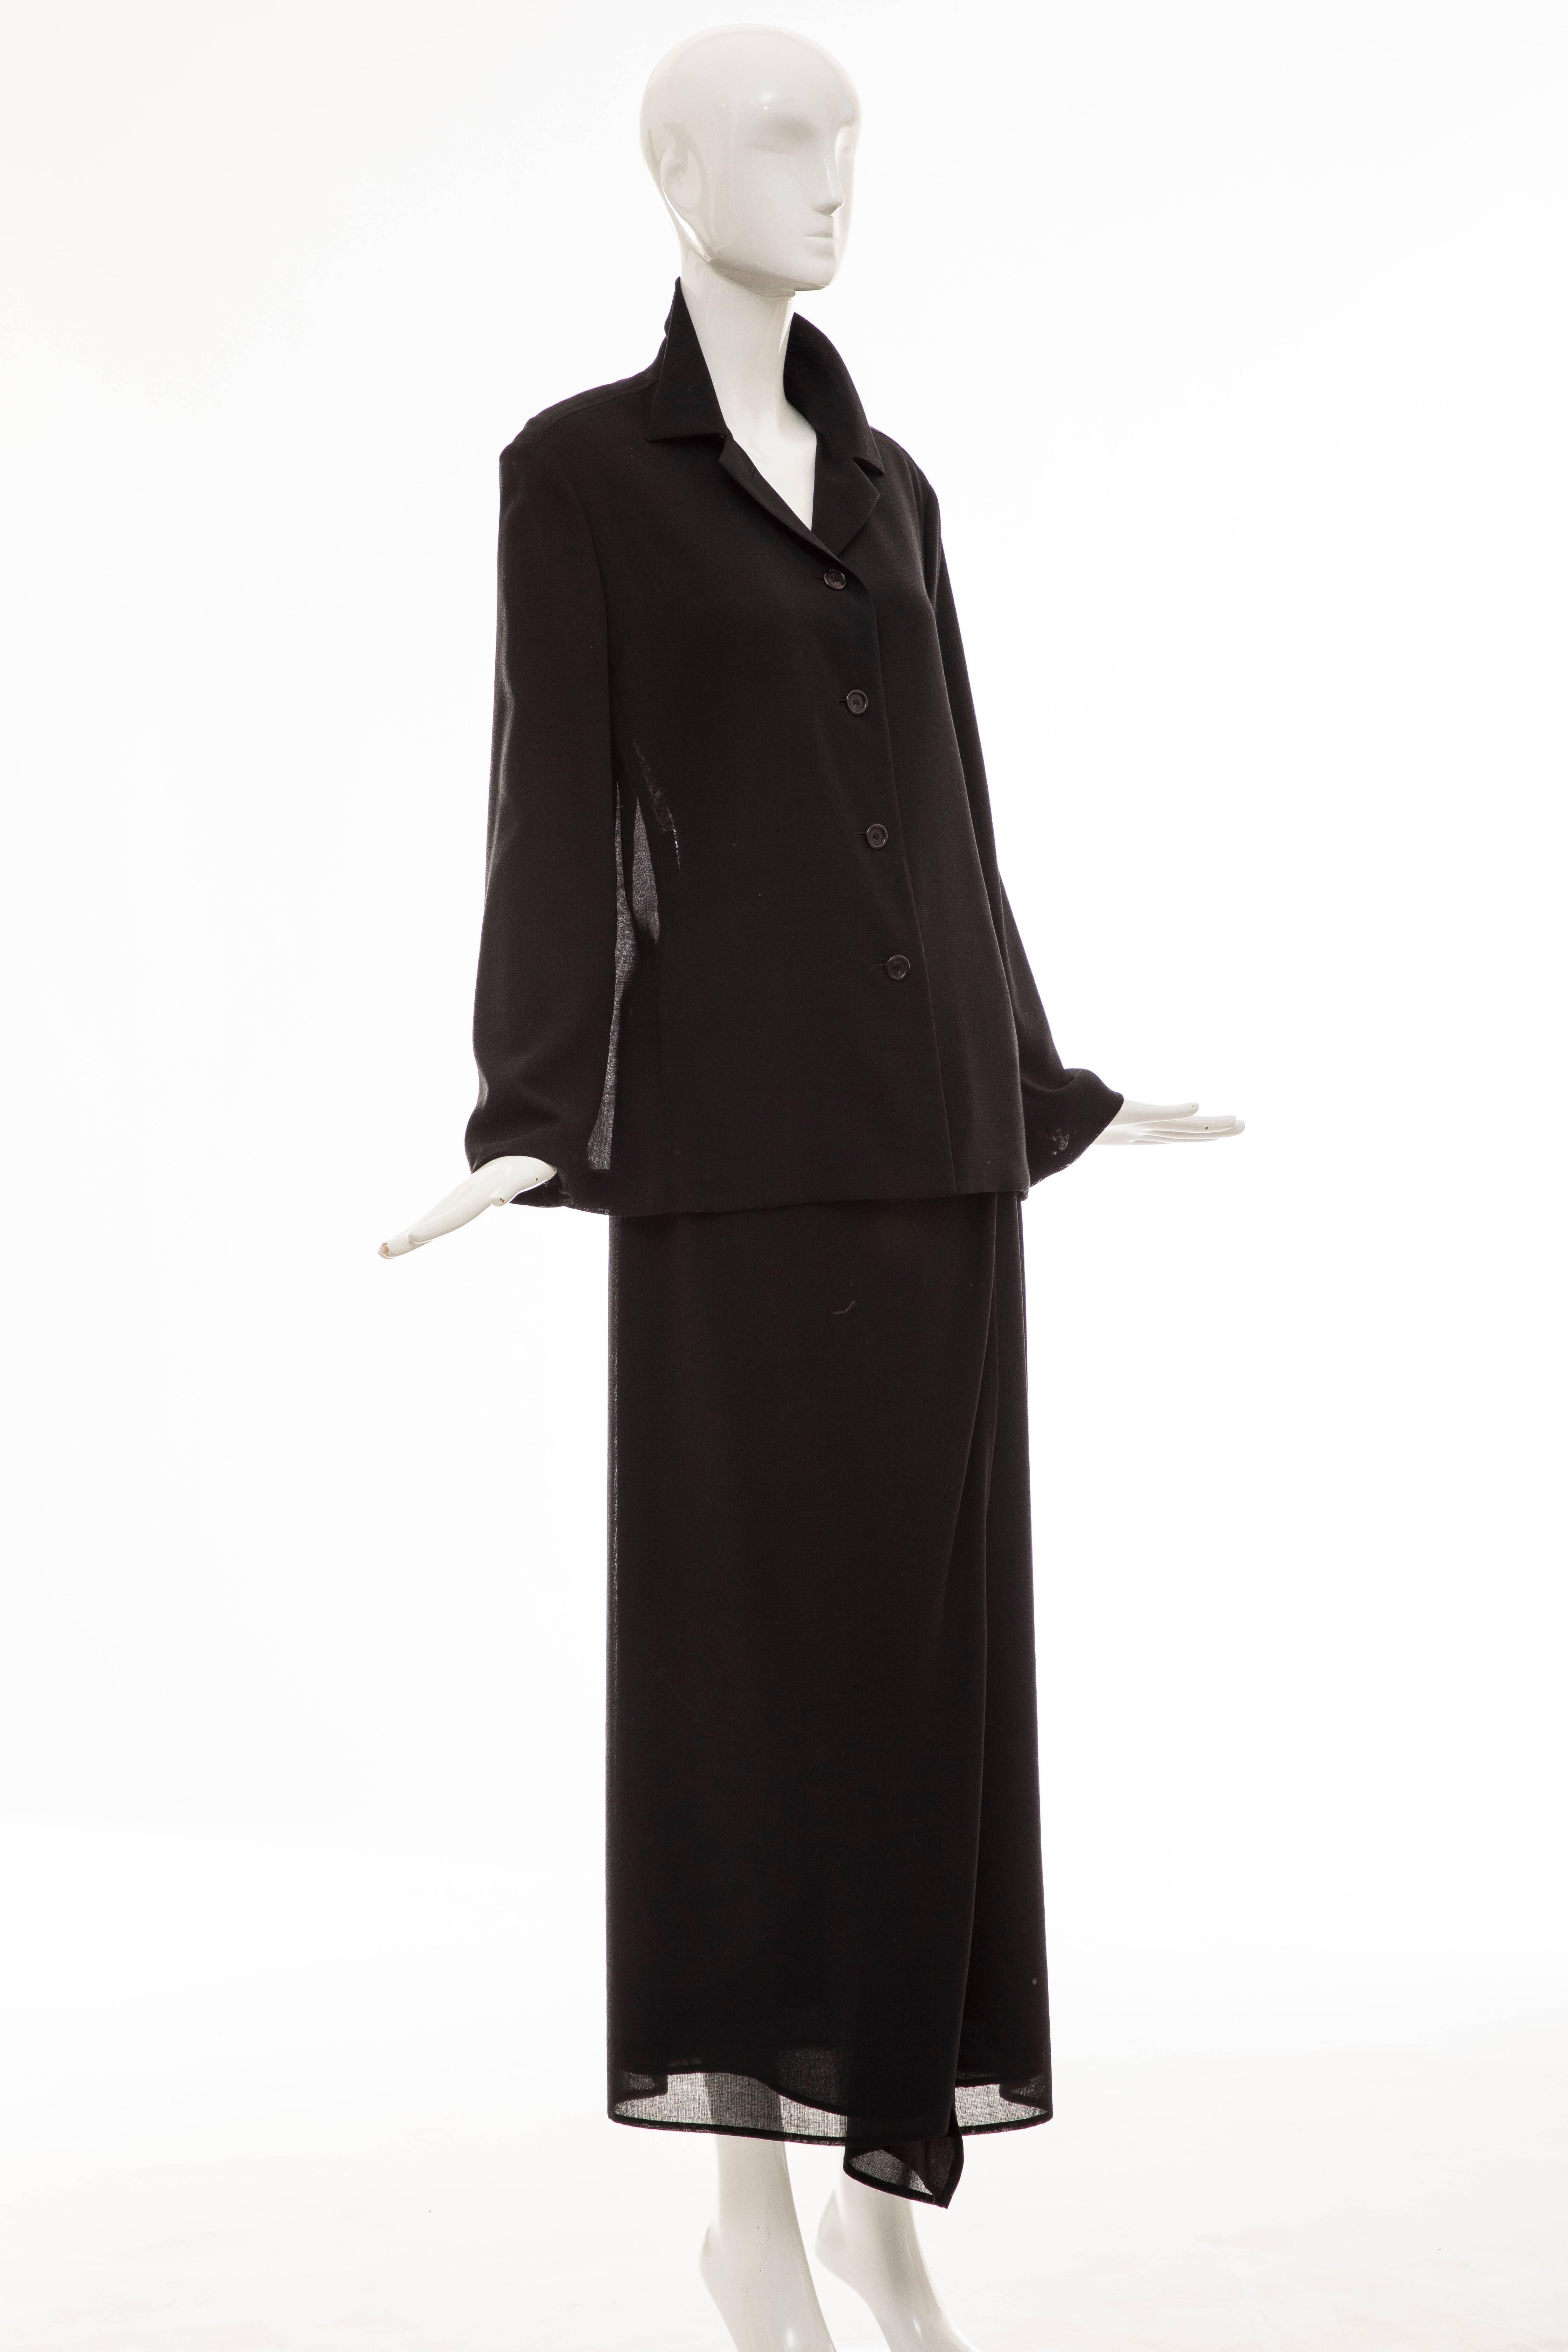 Cerruti 1881 Black Lightweight Wool Gauze Skirt-Suit, Circa 1990's In Excellent Condition For Sale In Cincinnati, OH